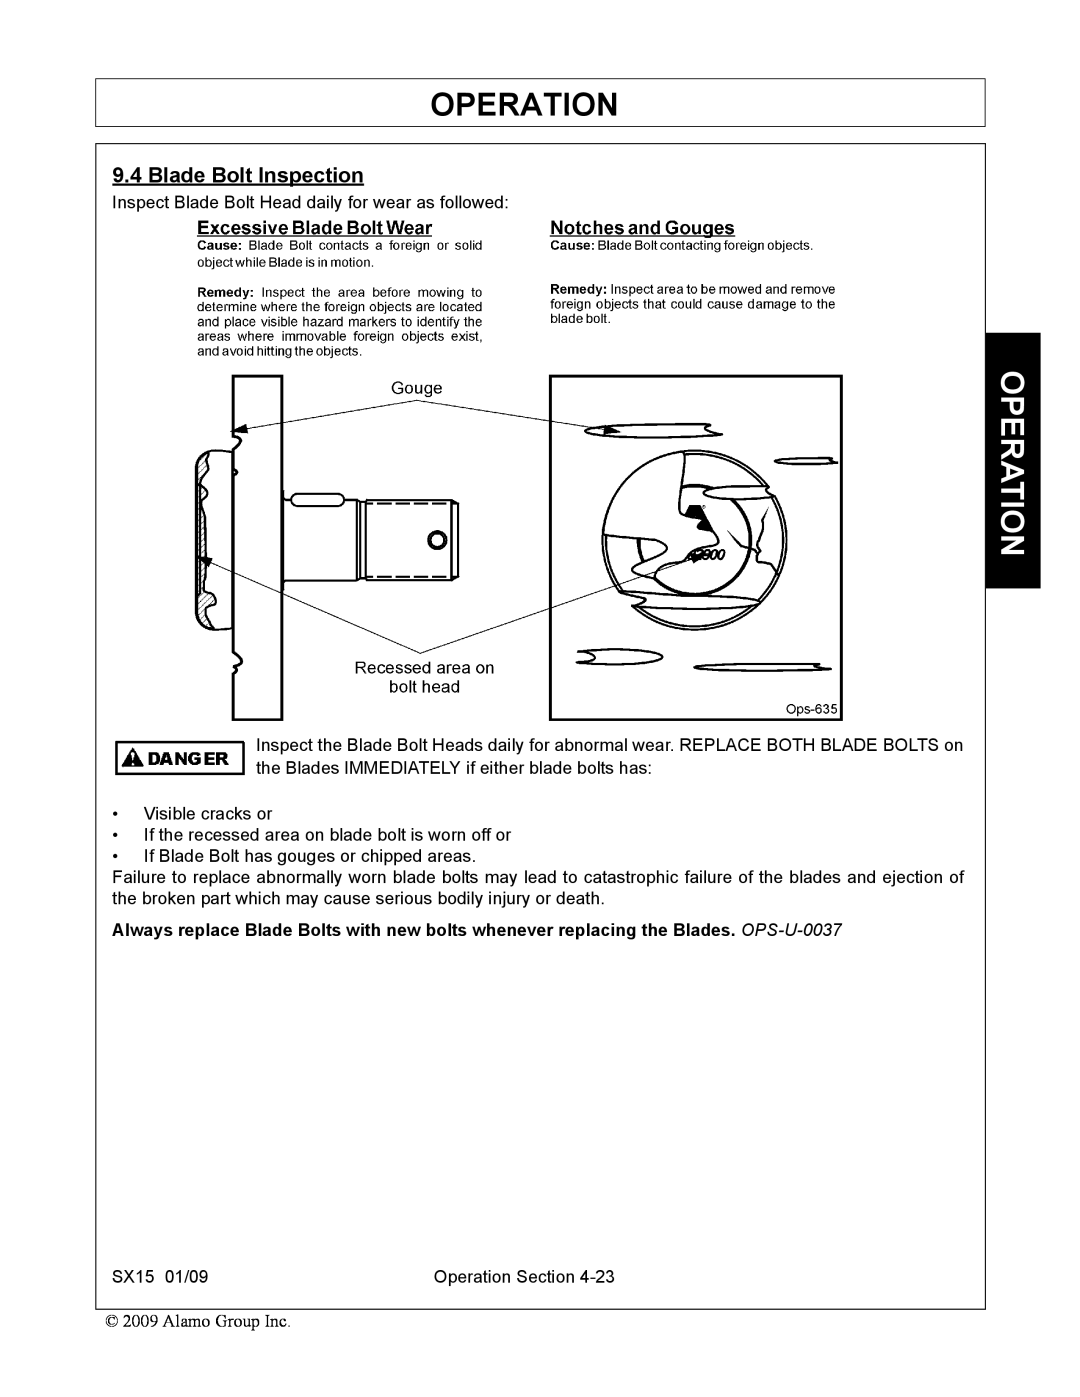 Alamo SX15 manual Blade Bolt Inspection, Operation 